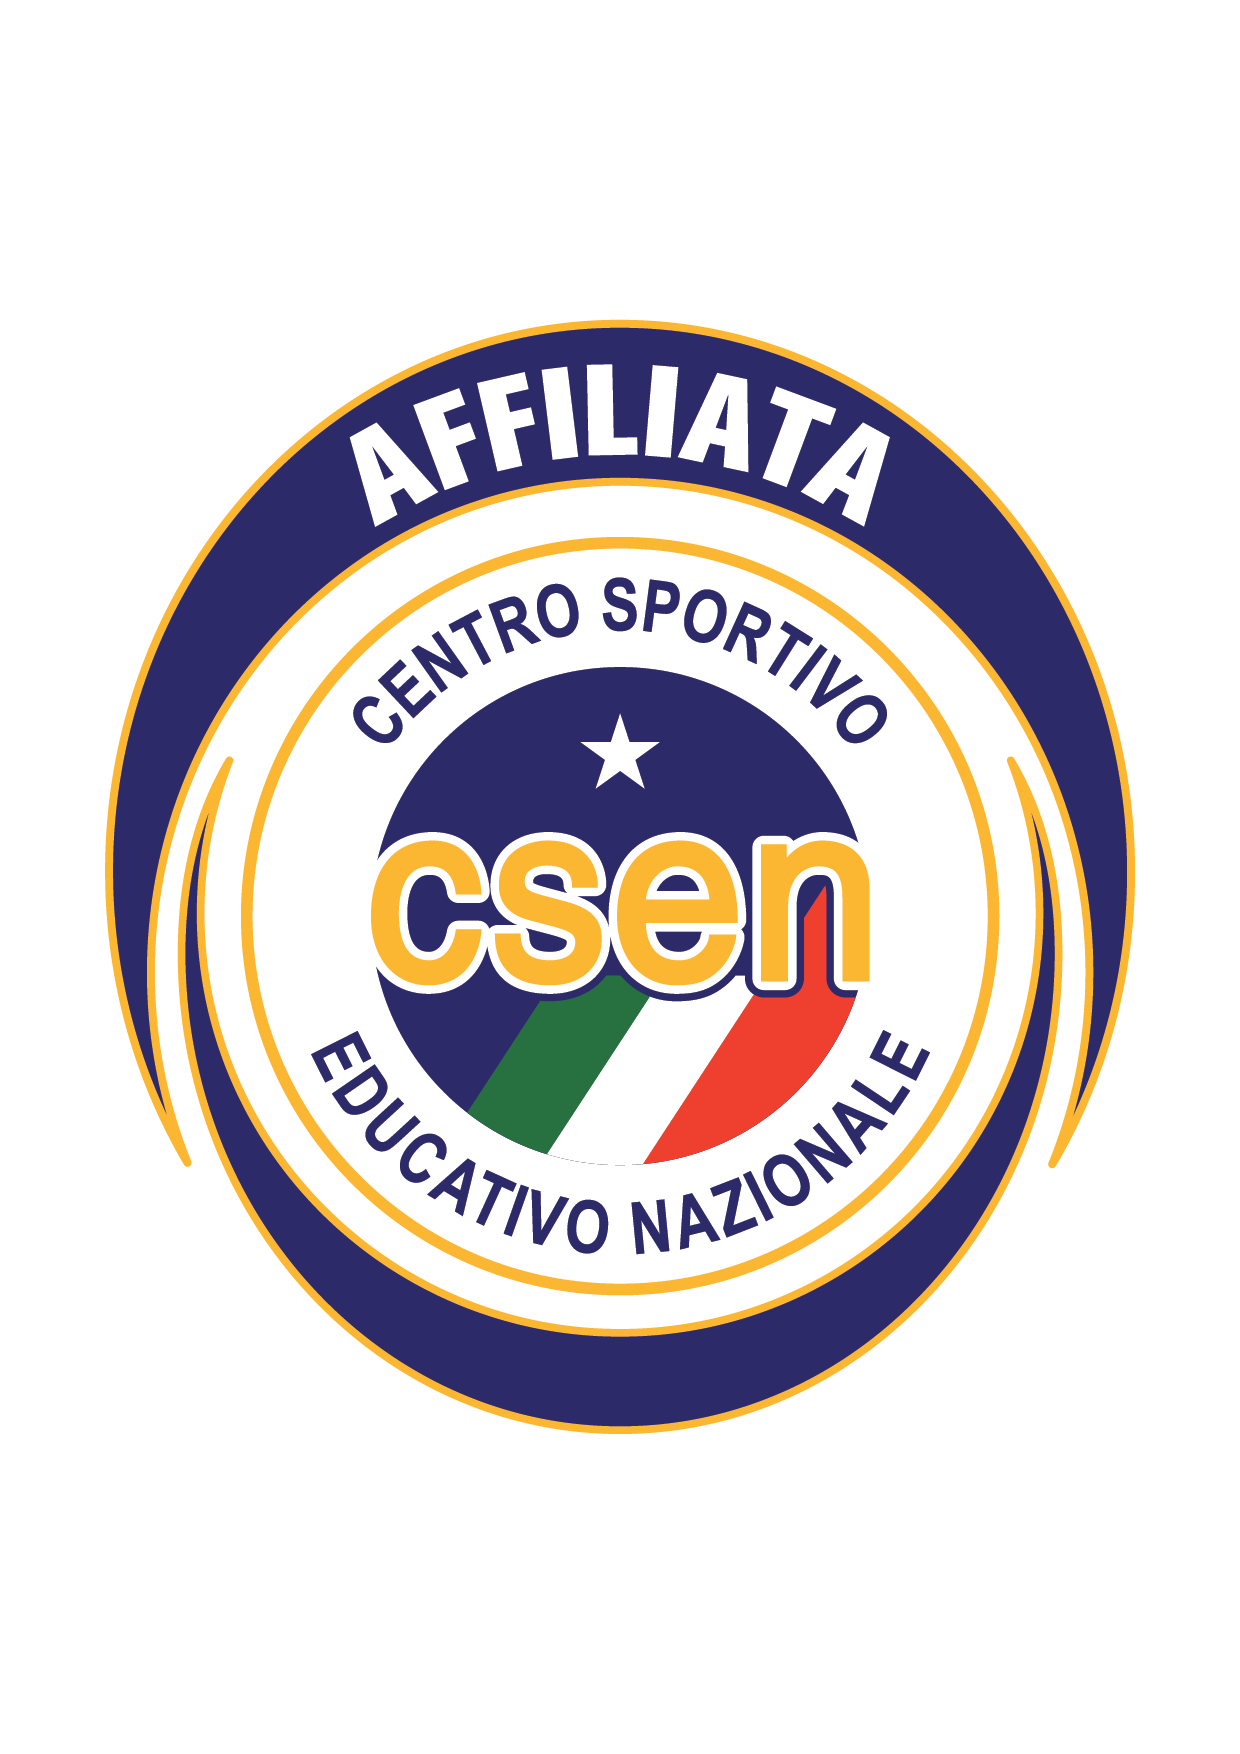 AffiliataCSEN_Logo_Nuovo